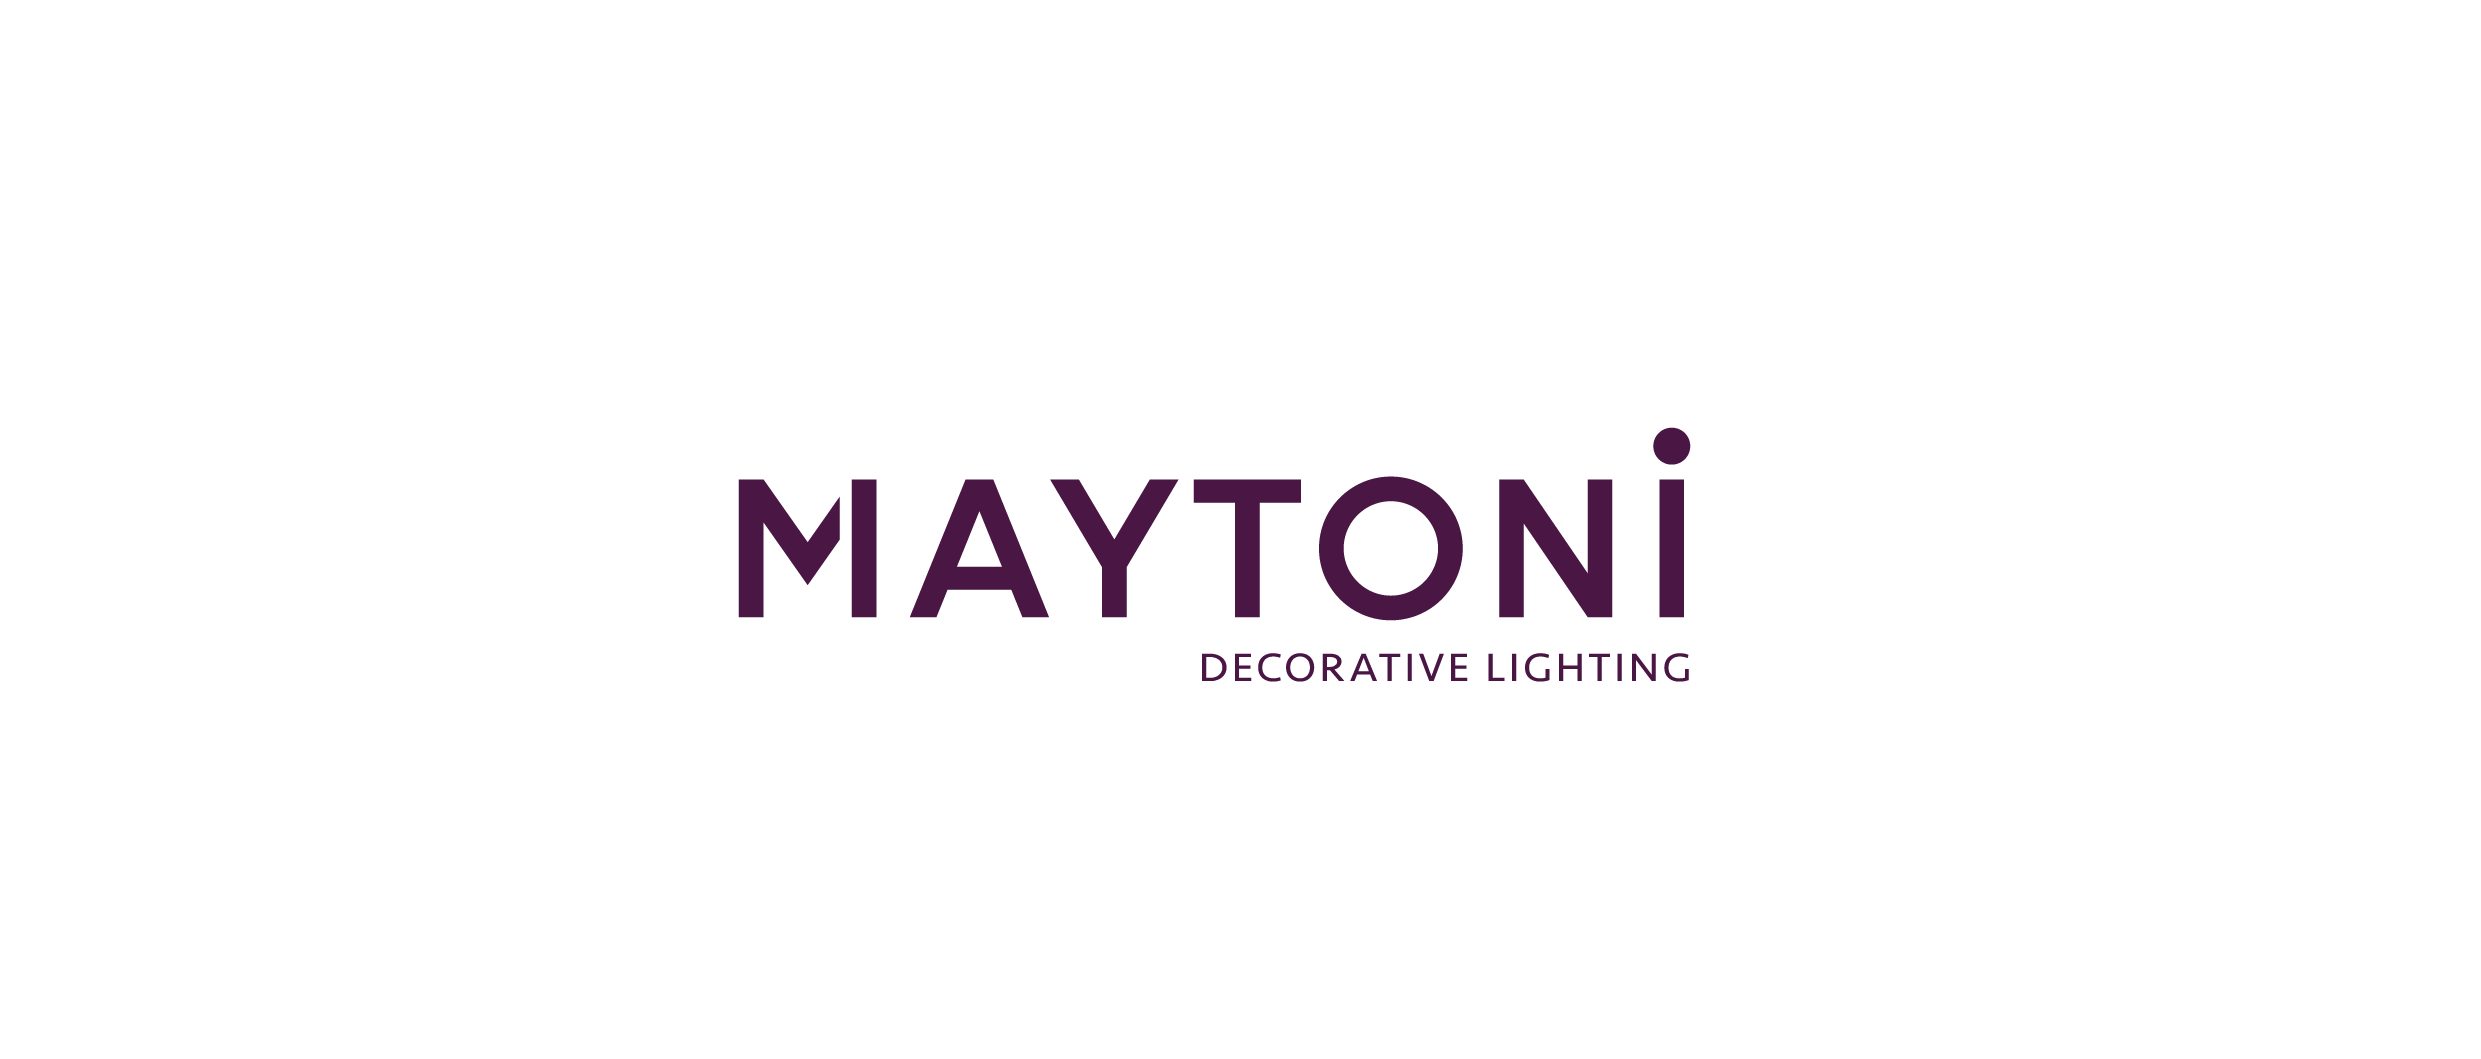 MAYTONI DECORATIVE LIGHTING